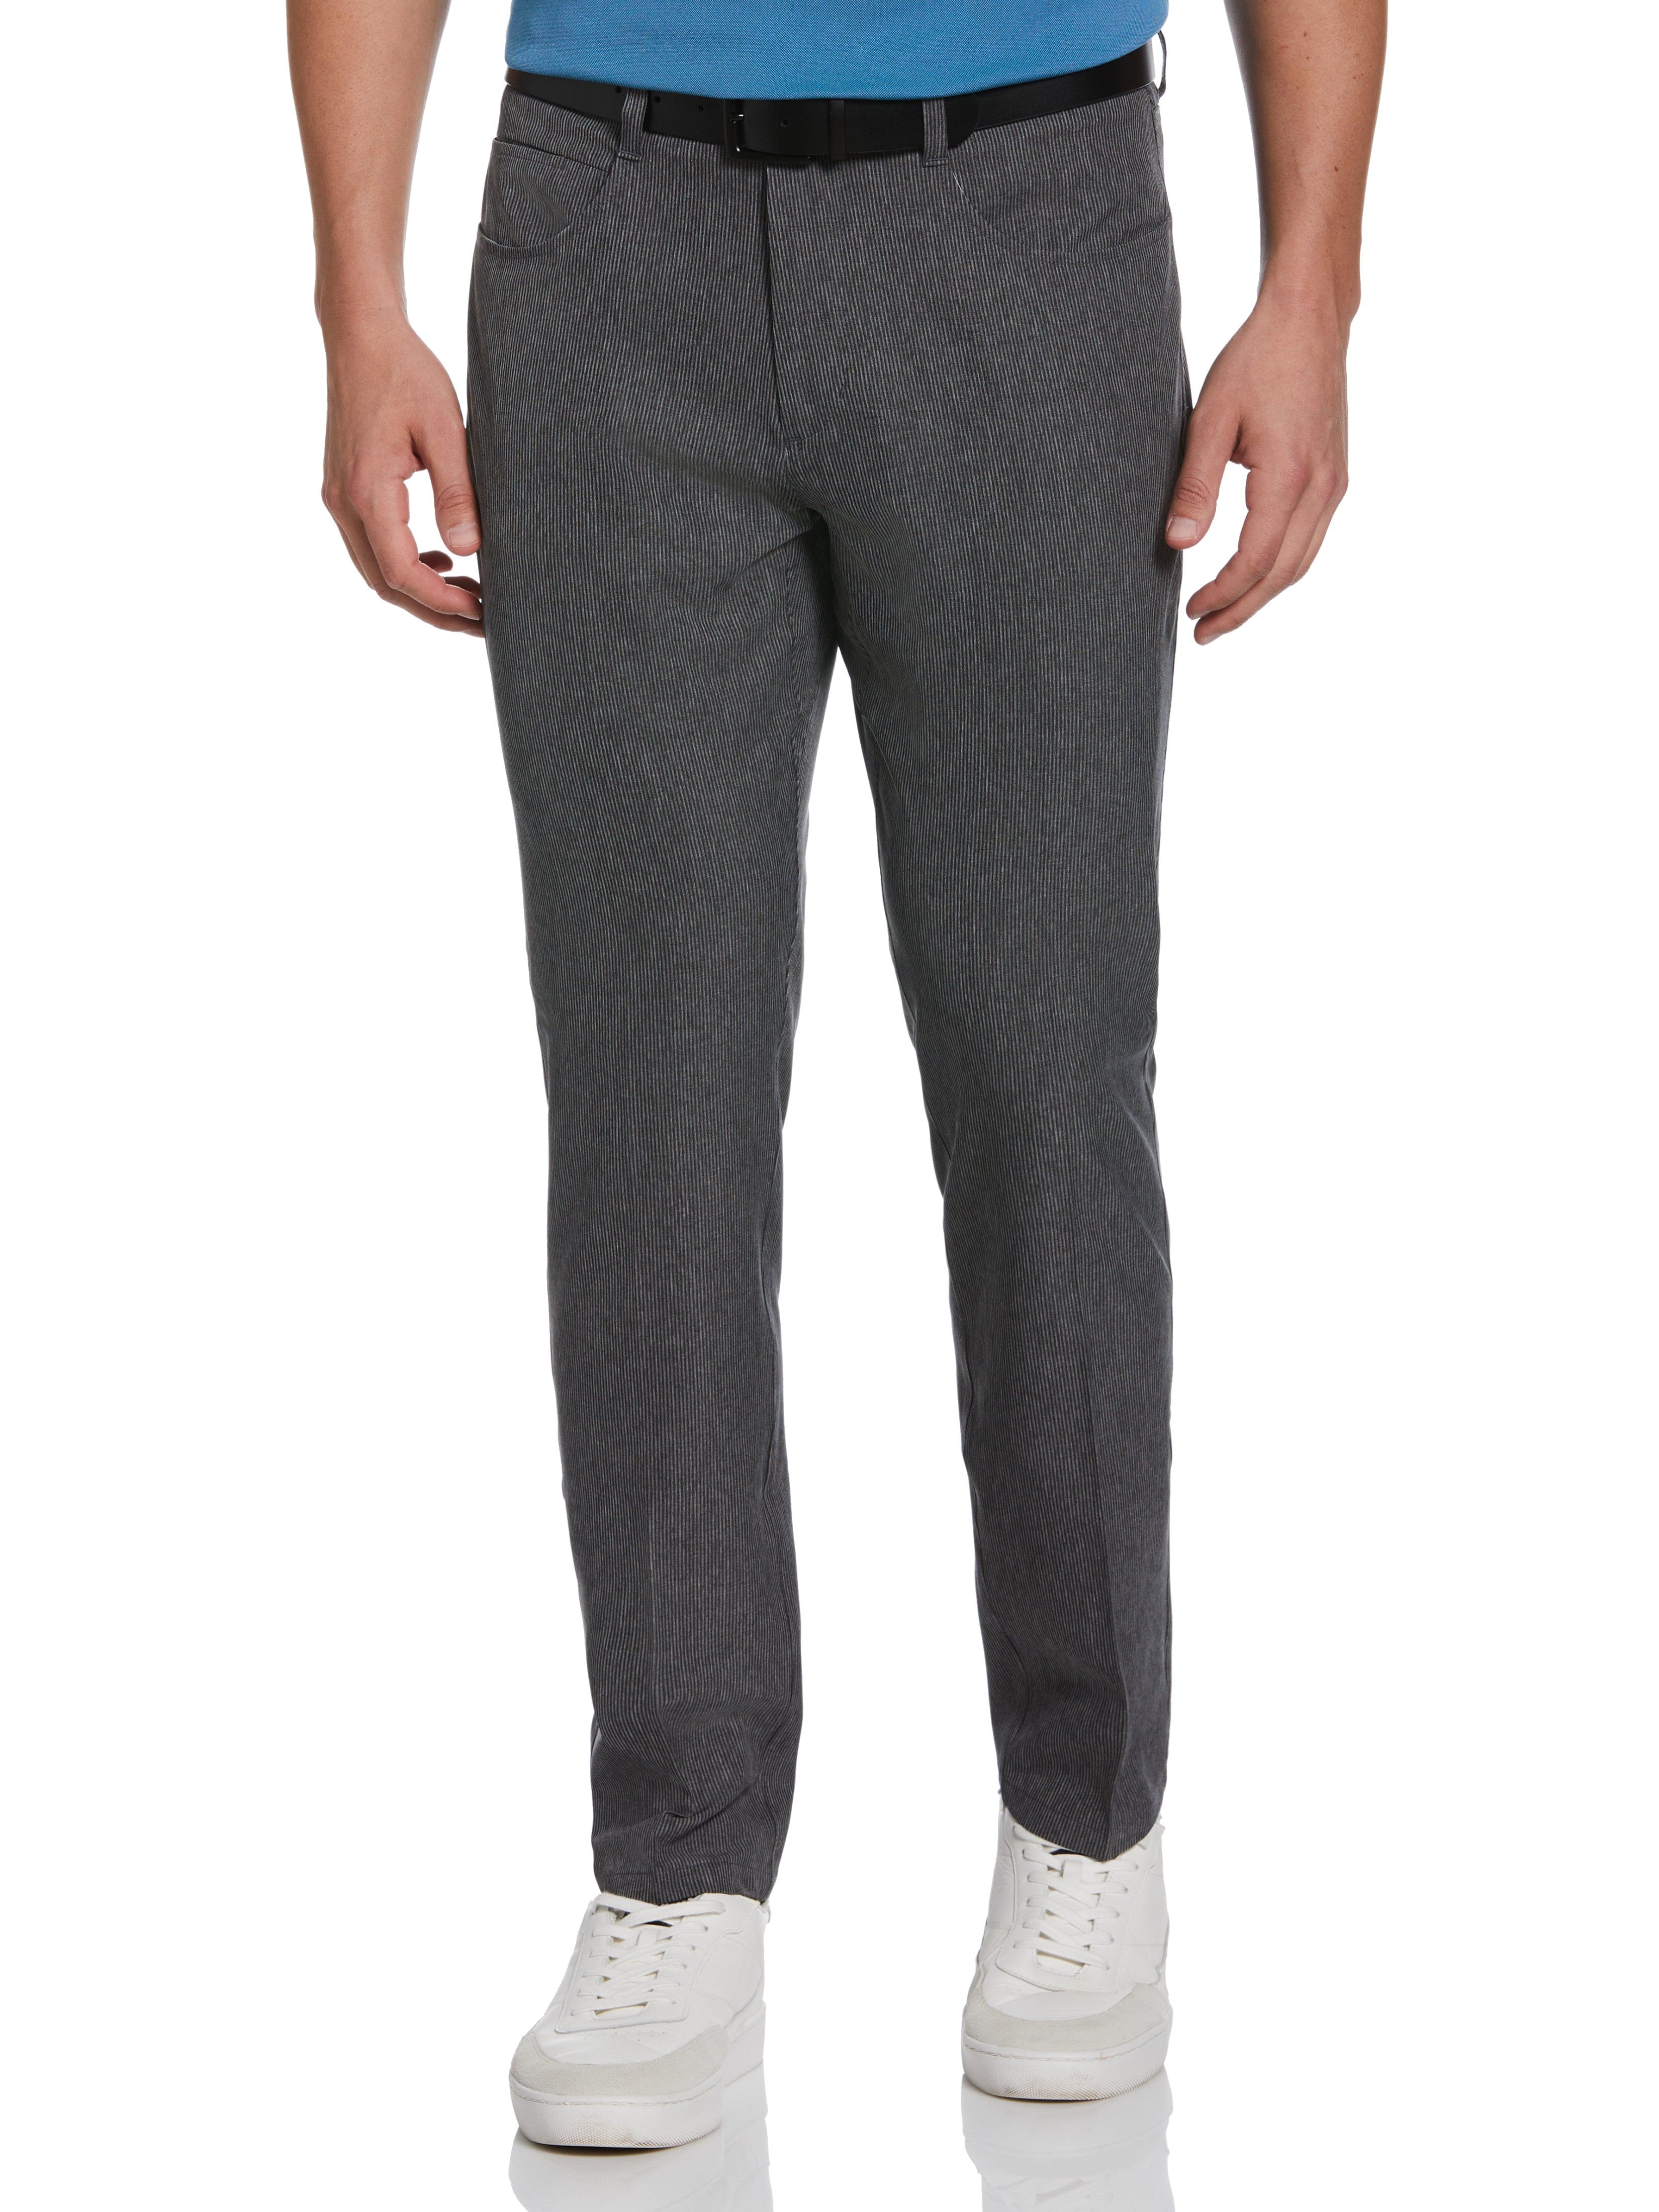 Original Penguin Mens Flat Front Fine Line Print Golf Pants, Size 32 x 30, Black, Polyester/Elastane | Golf Apparel Shop